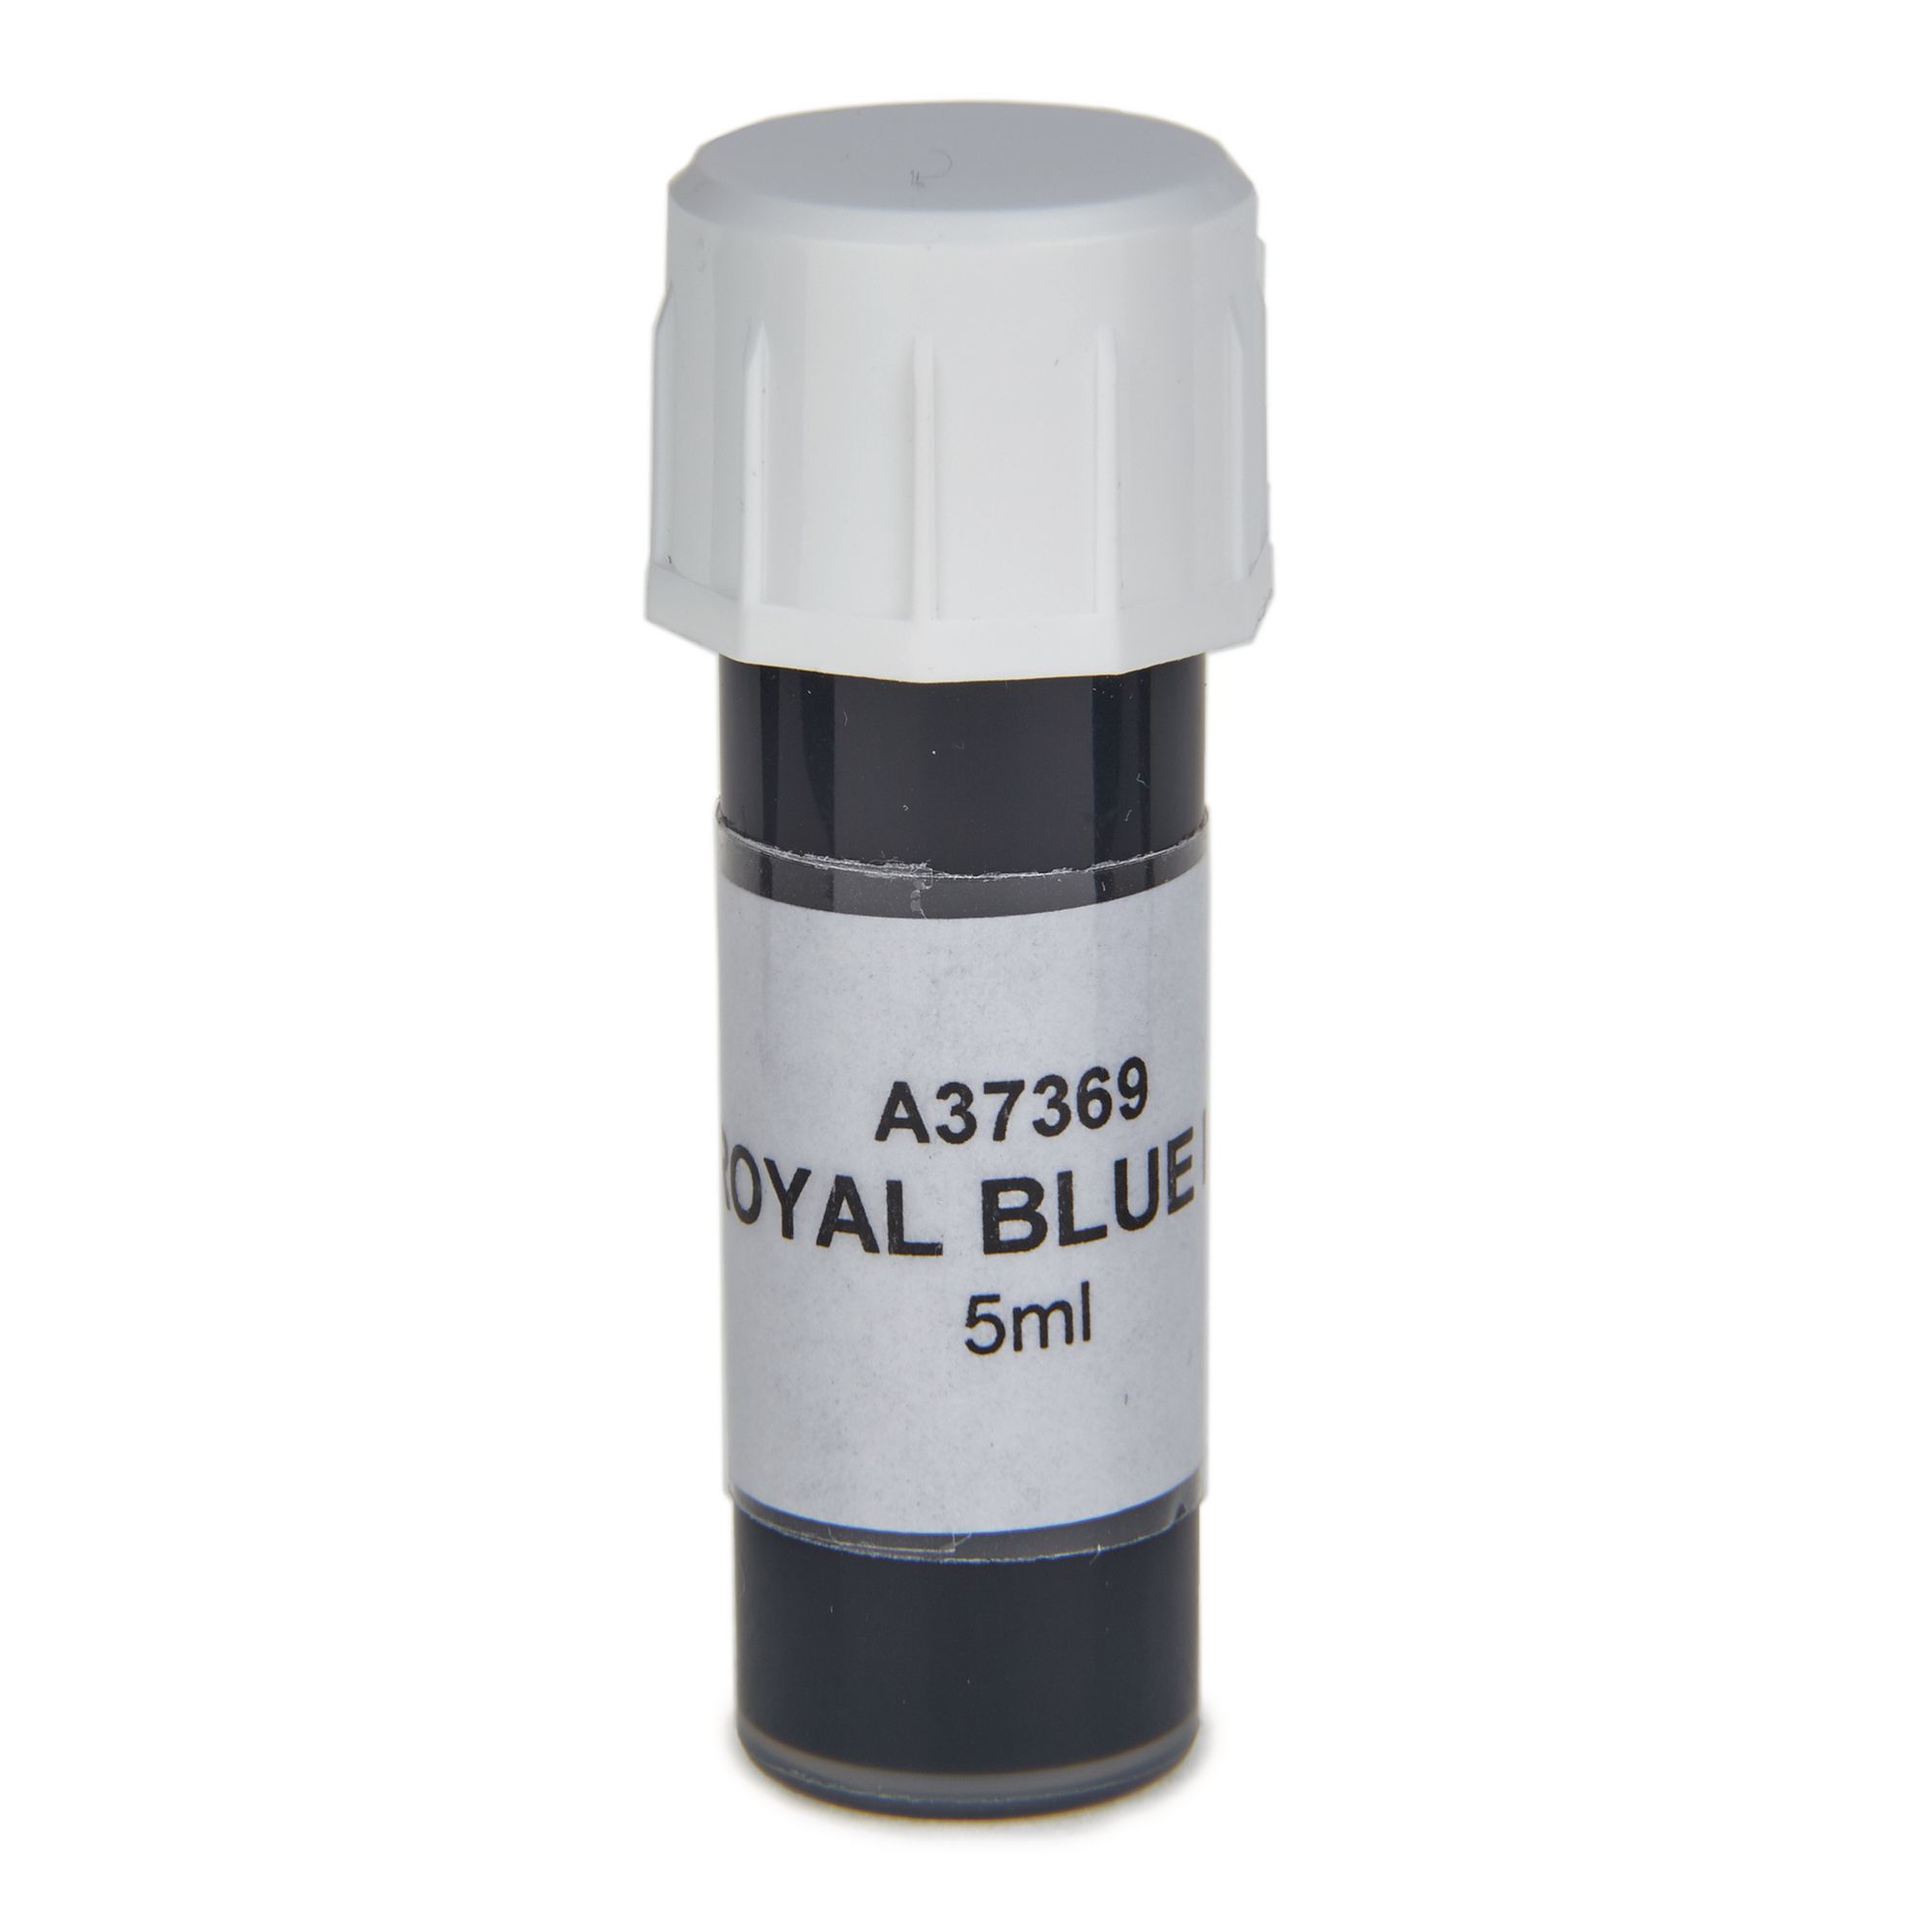 Royal Blue Ink 5ml